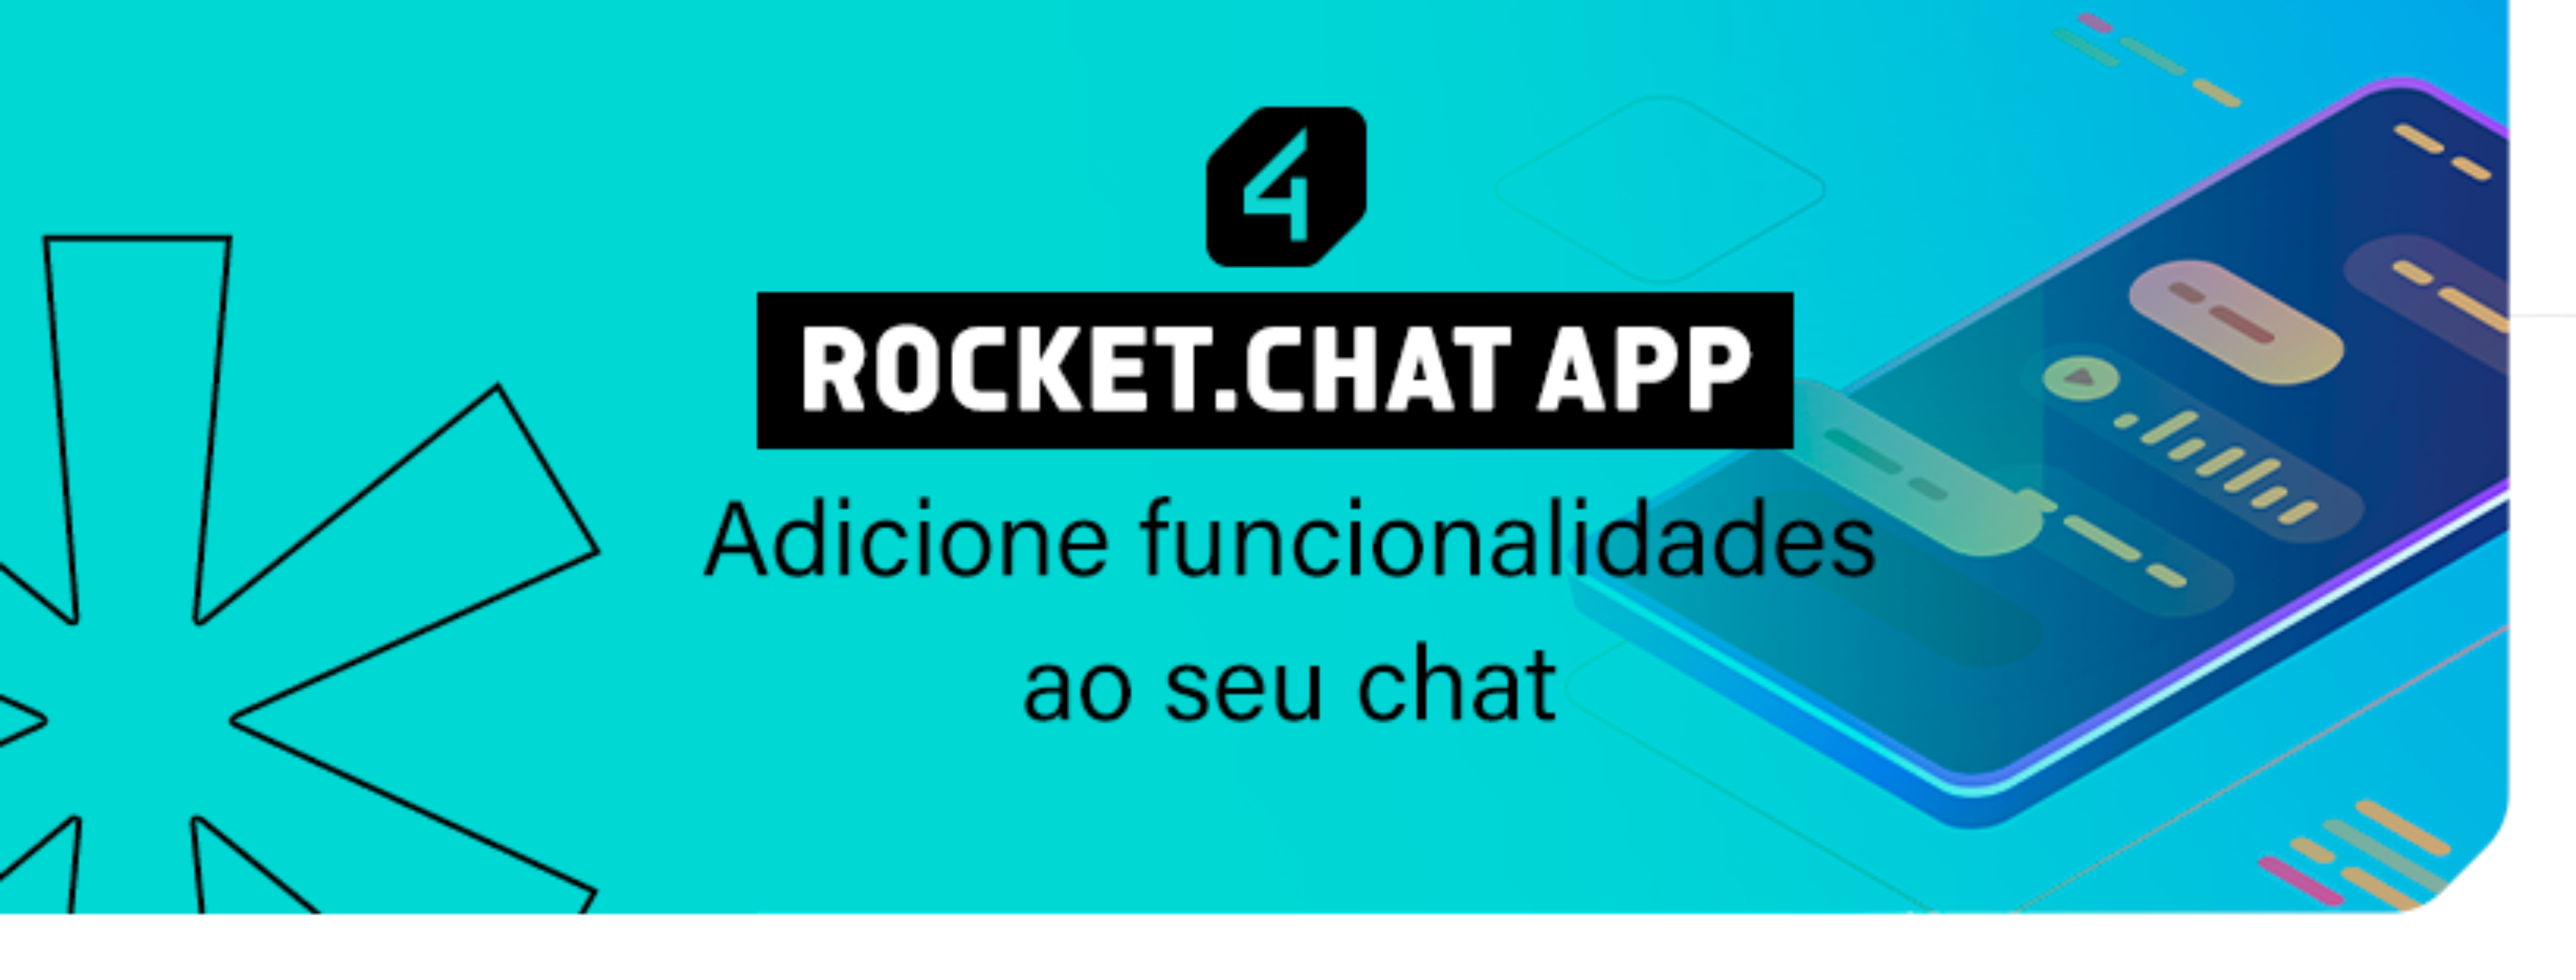 rocketchat app calling